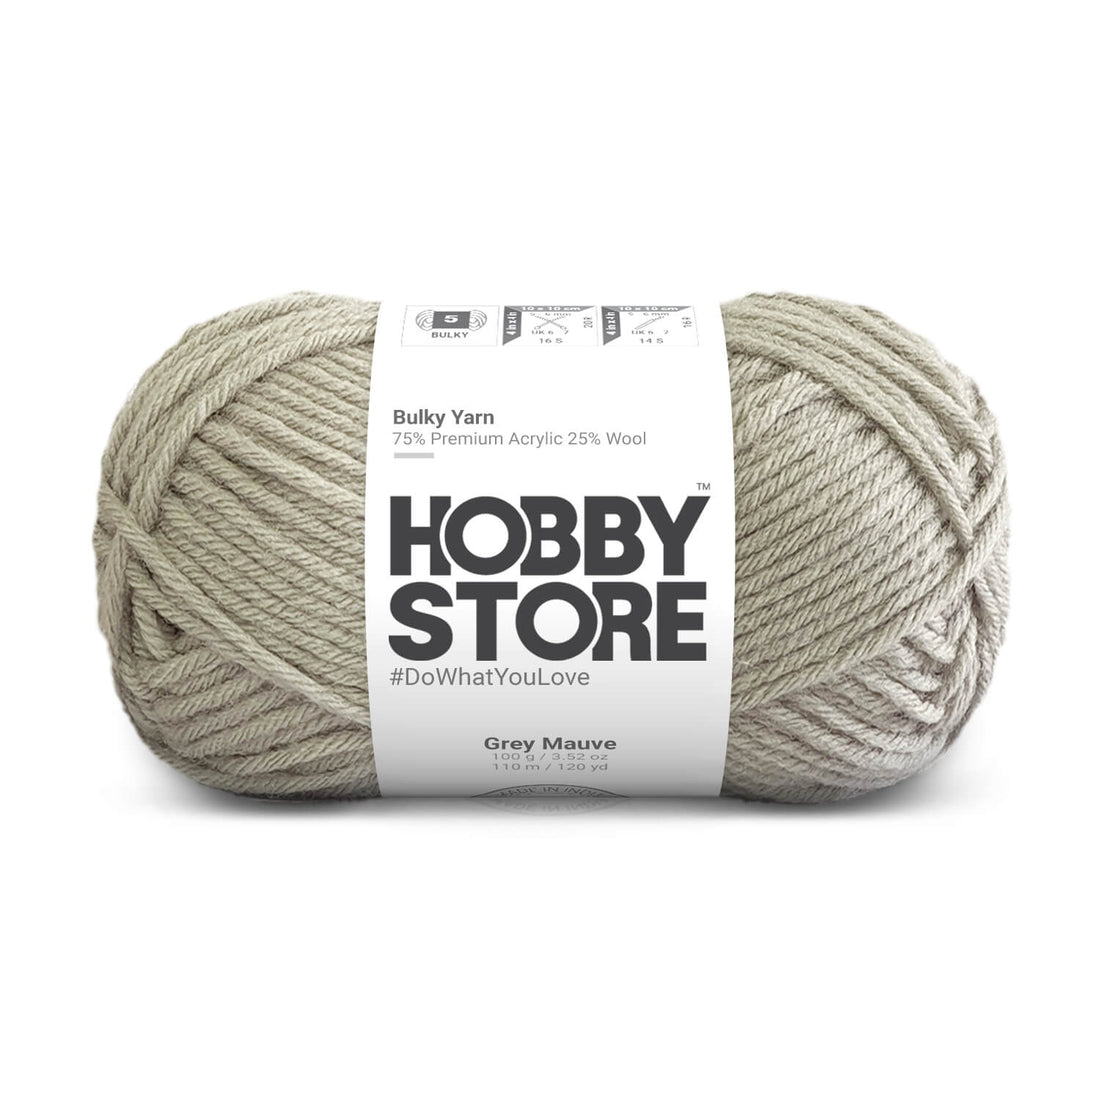 Bulky Yarn by Hobby Store - Grey Mauve 6014